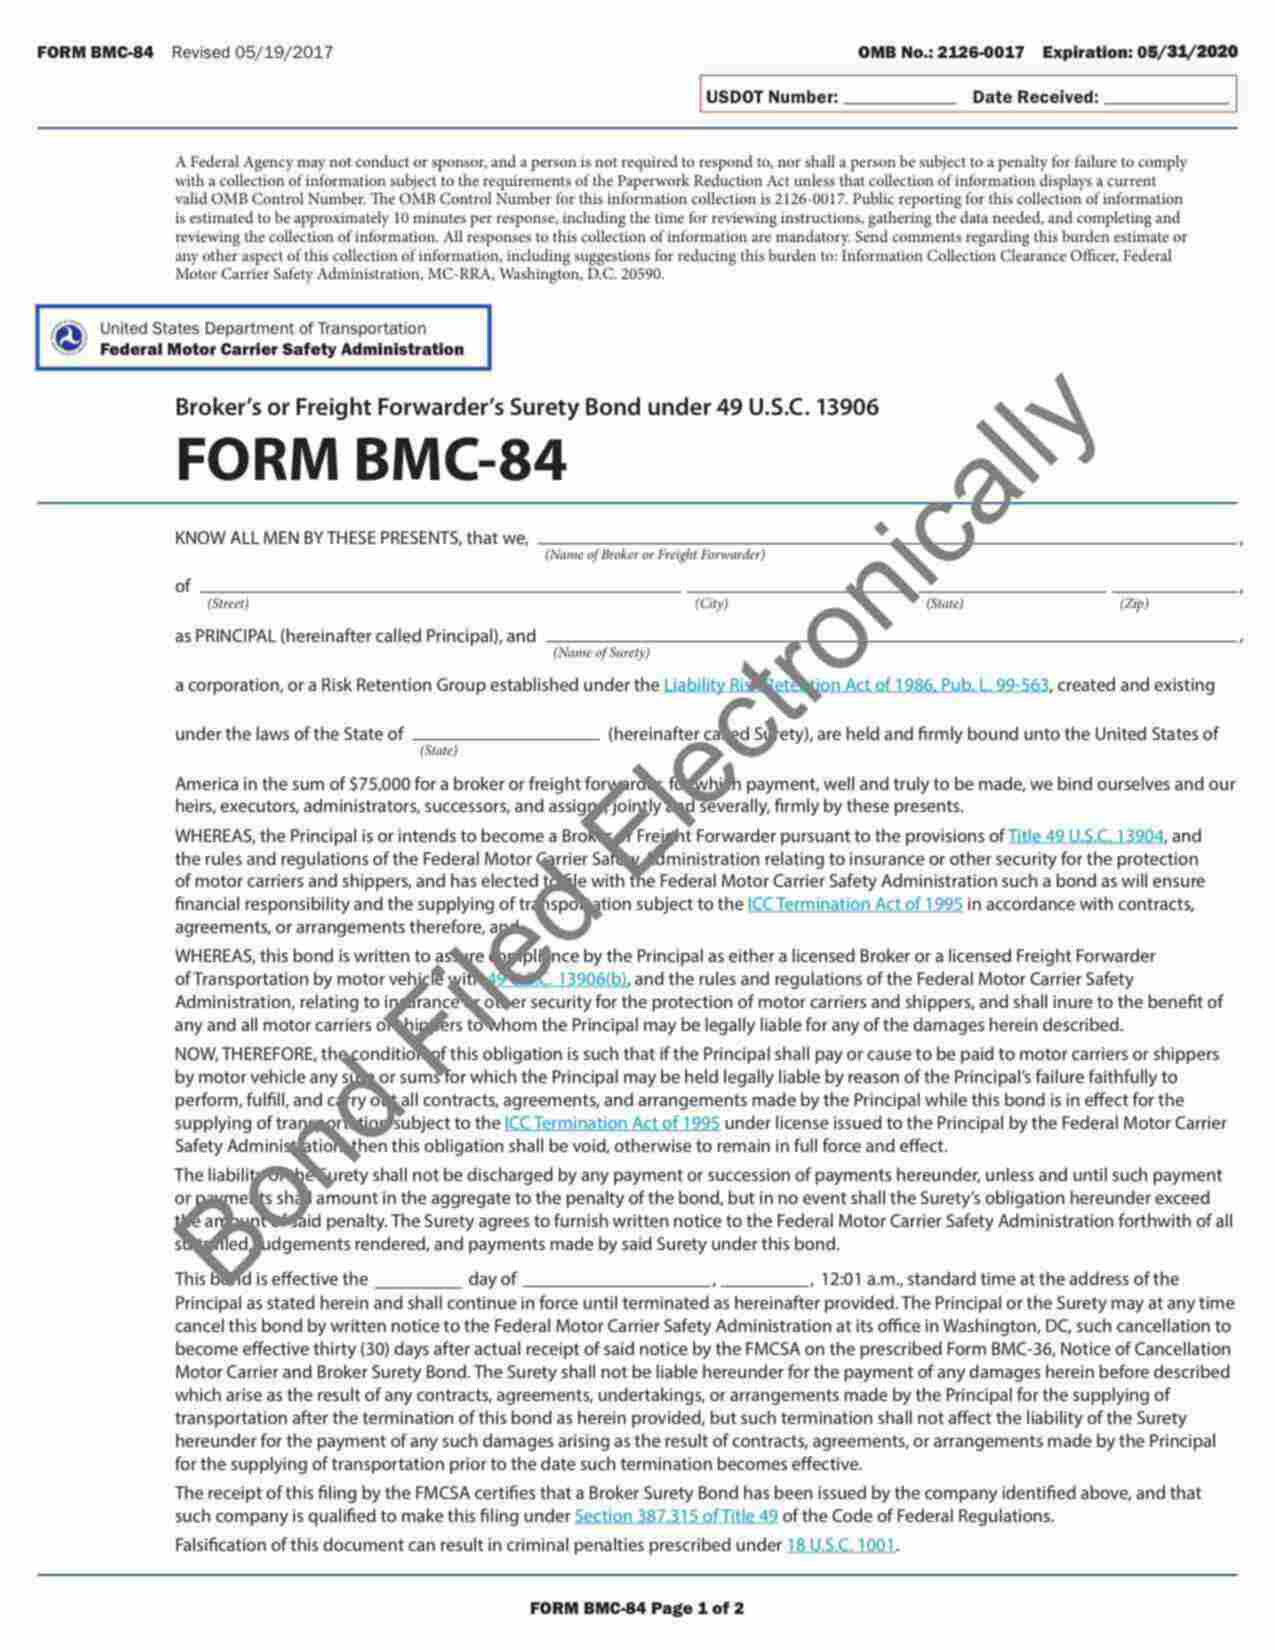 California Property Broker or Freight Forwarder BMC-84 (ICC Broker) Bond Form